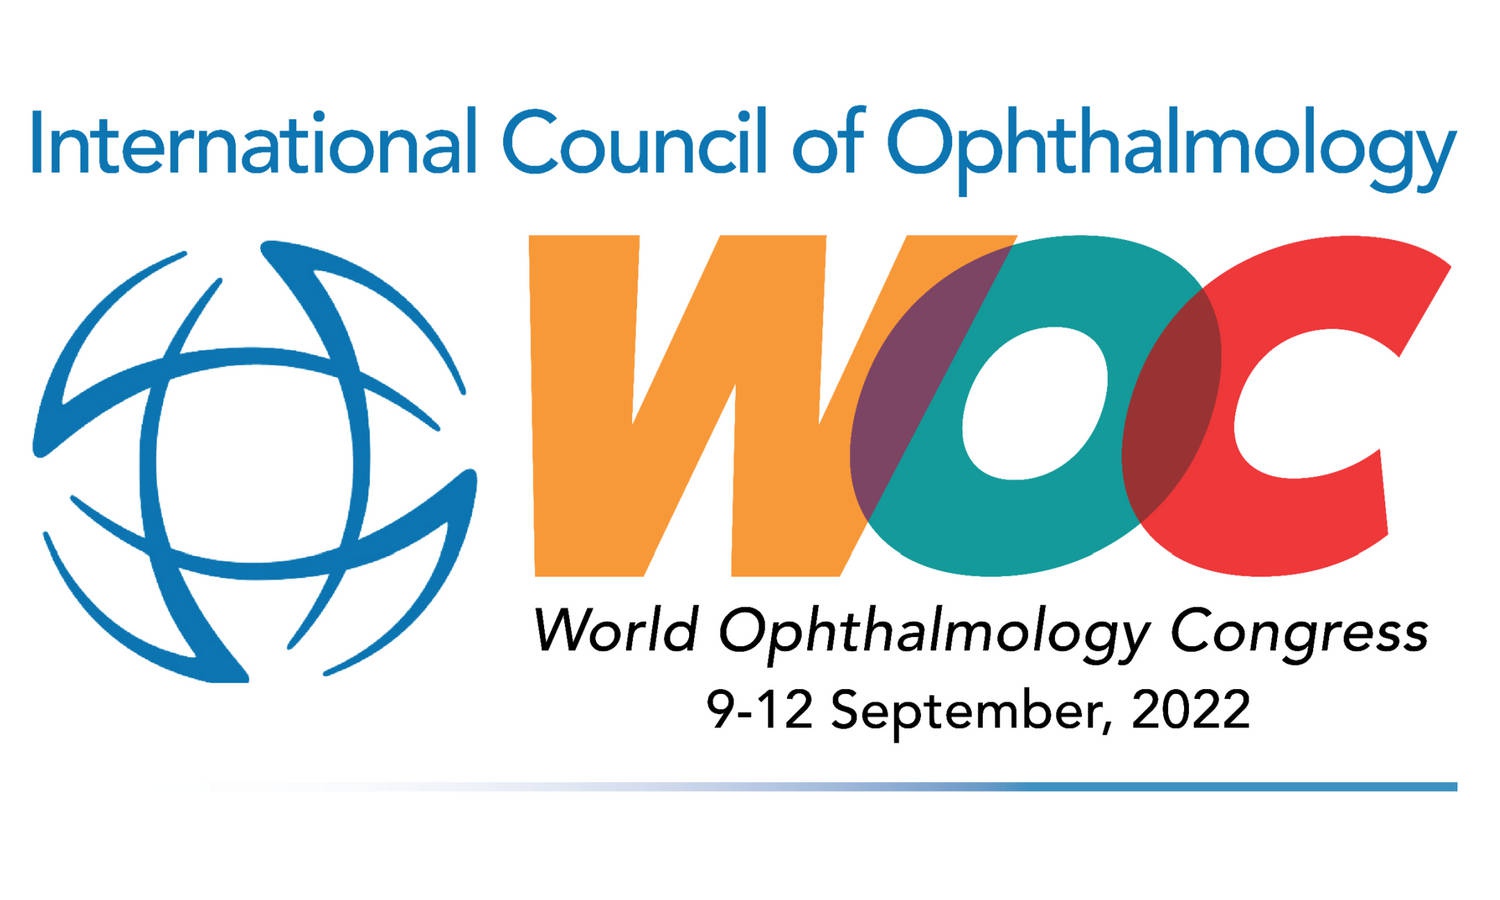 The World Ophthalmology Congress 2022